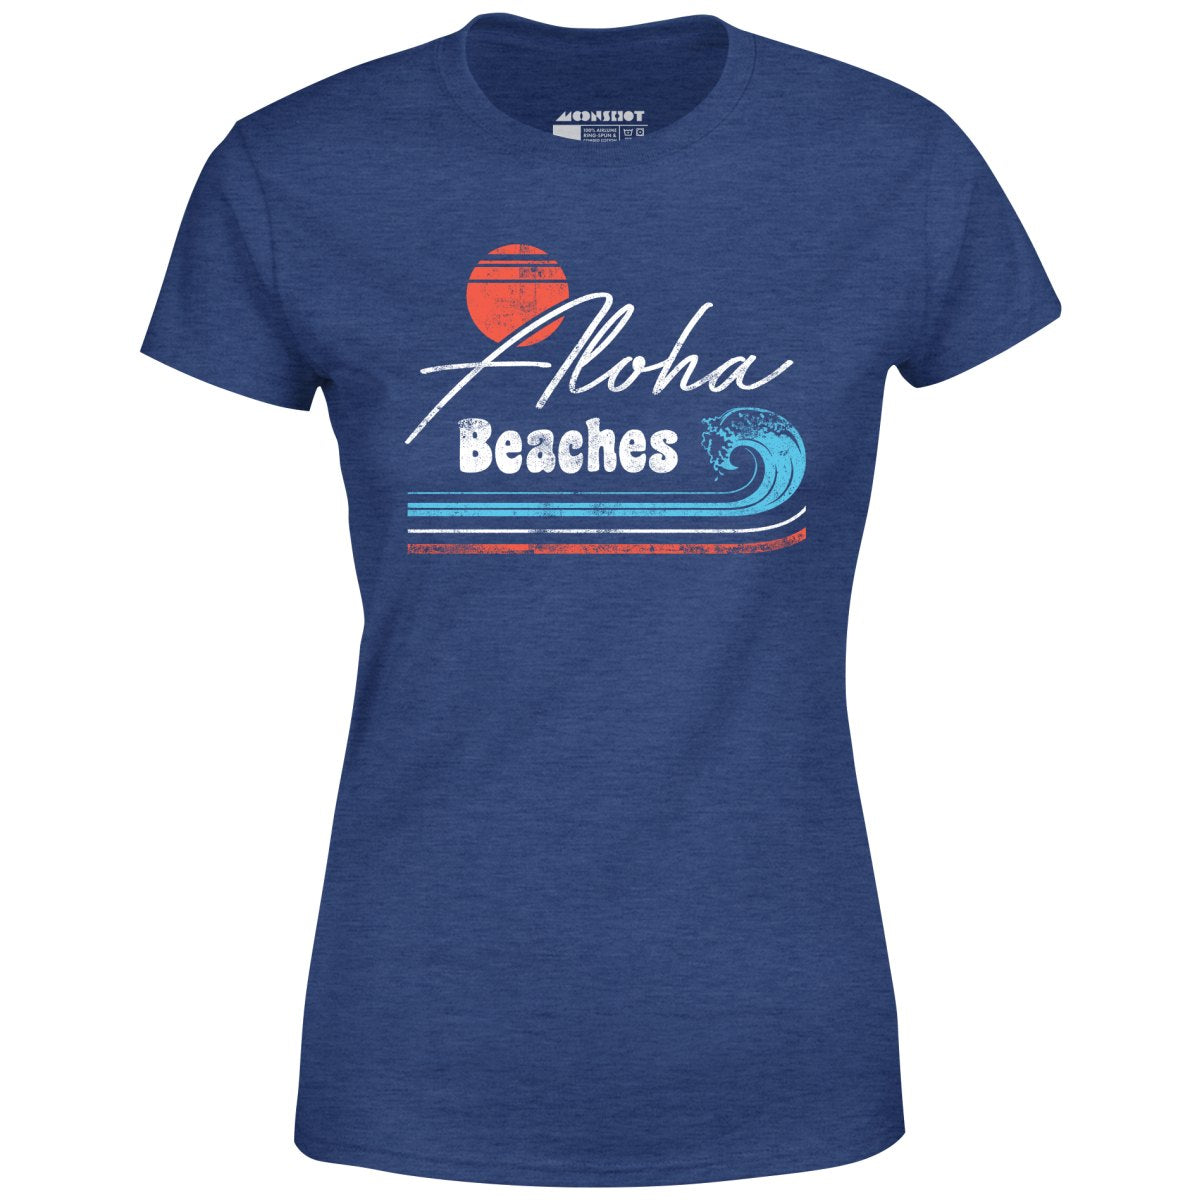 Aloha Beaches - Women's T-Shirt